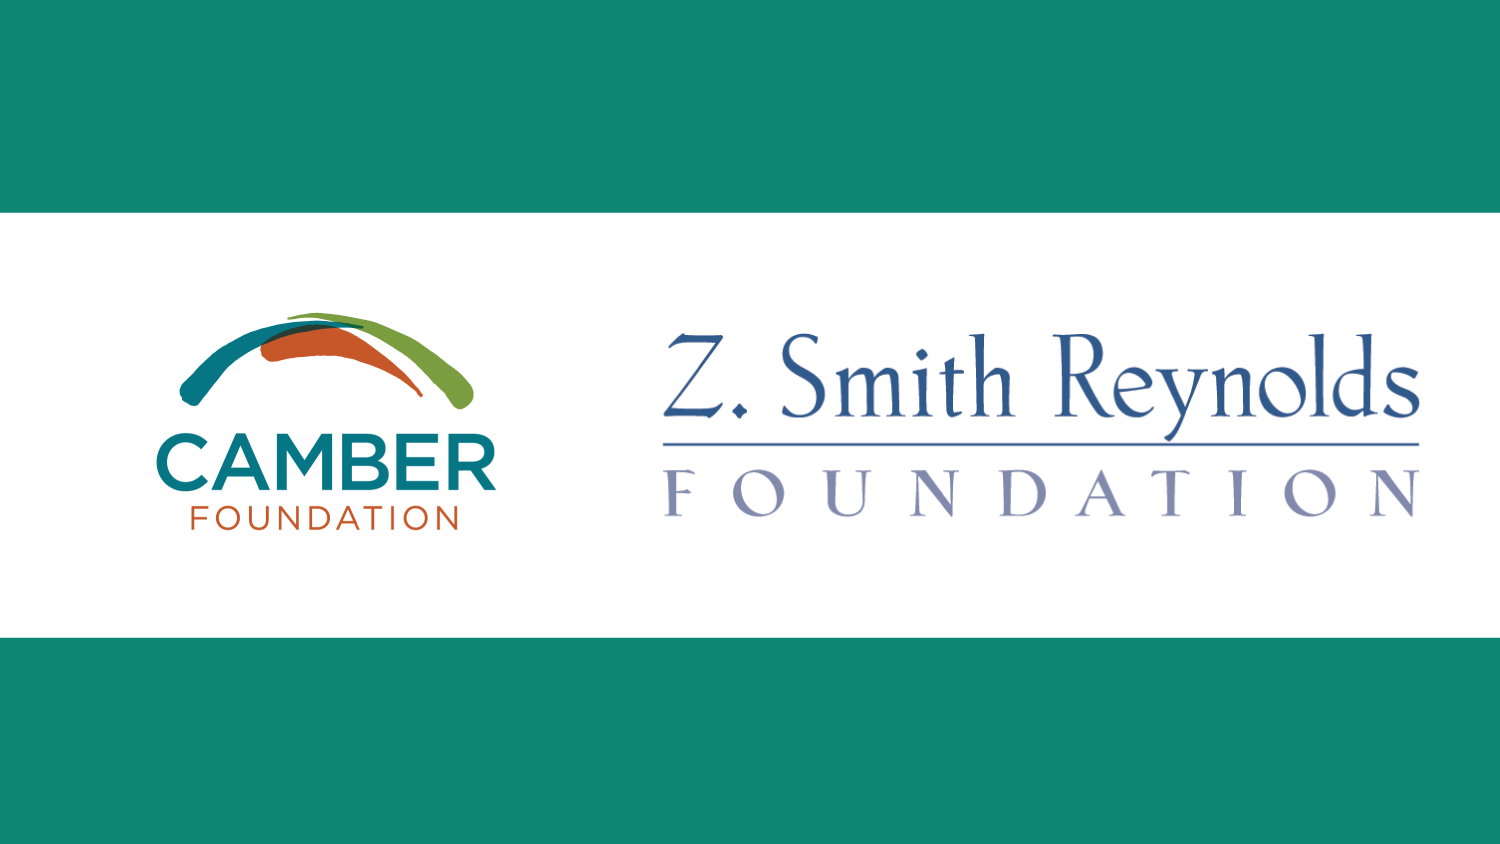 Camber Foundation logo and Z. Smith Reynolds Foundation logo